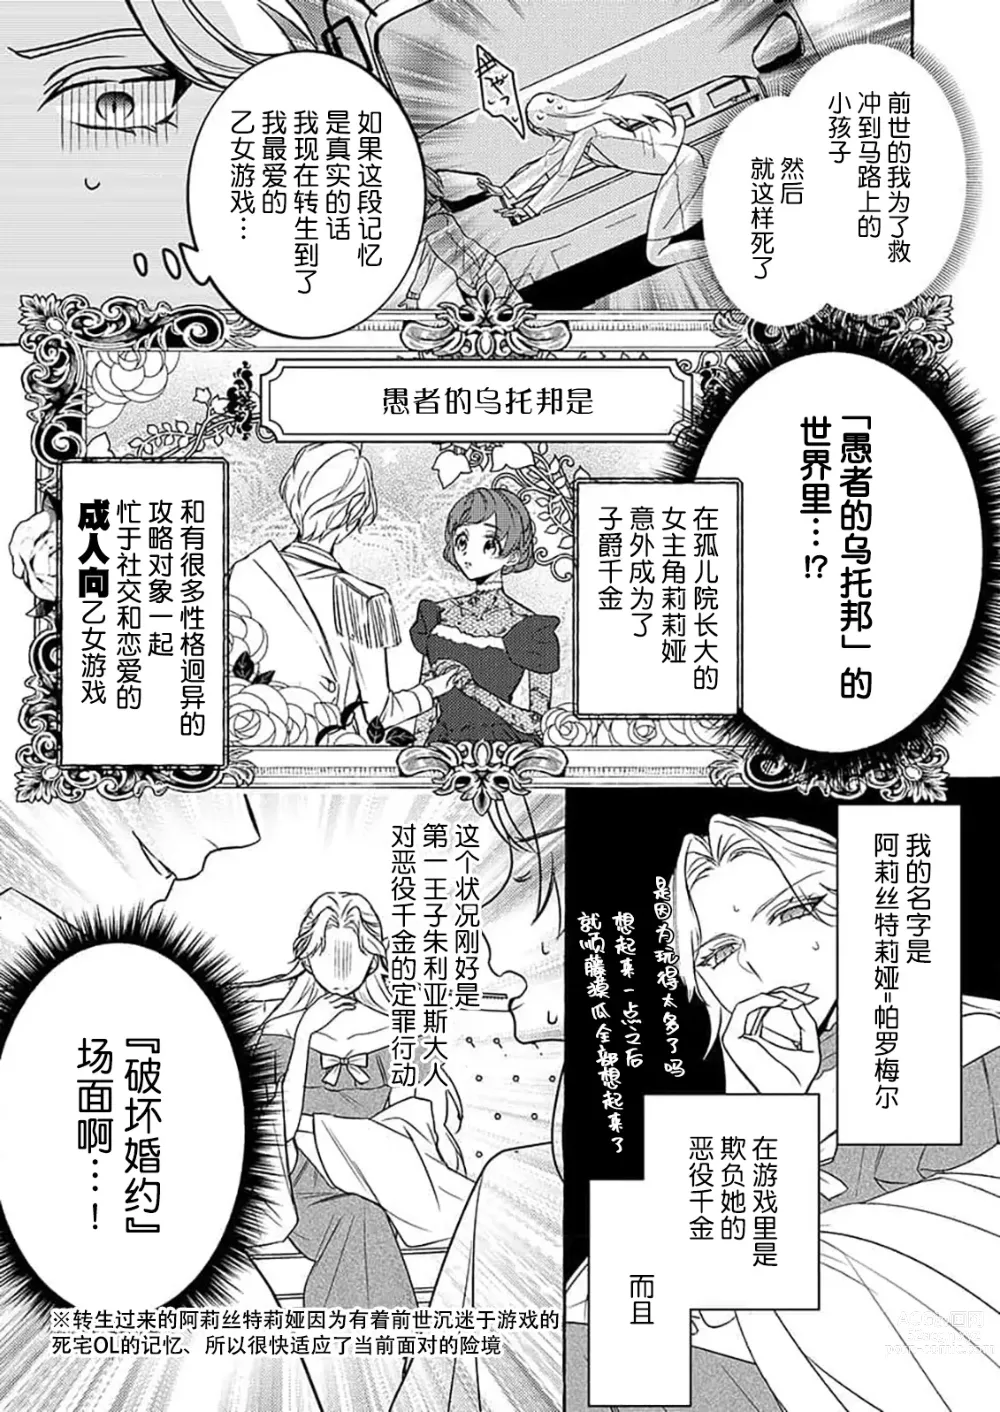 Page 6 of manga 这样的快感、是惩罚~第二次的婚约是和一直喜欢的初恋